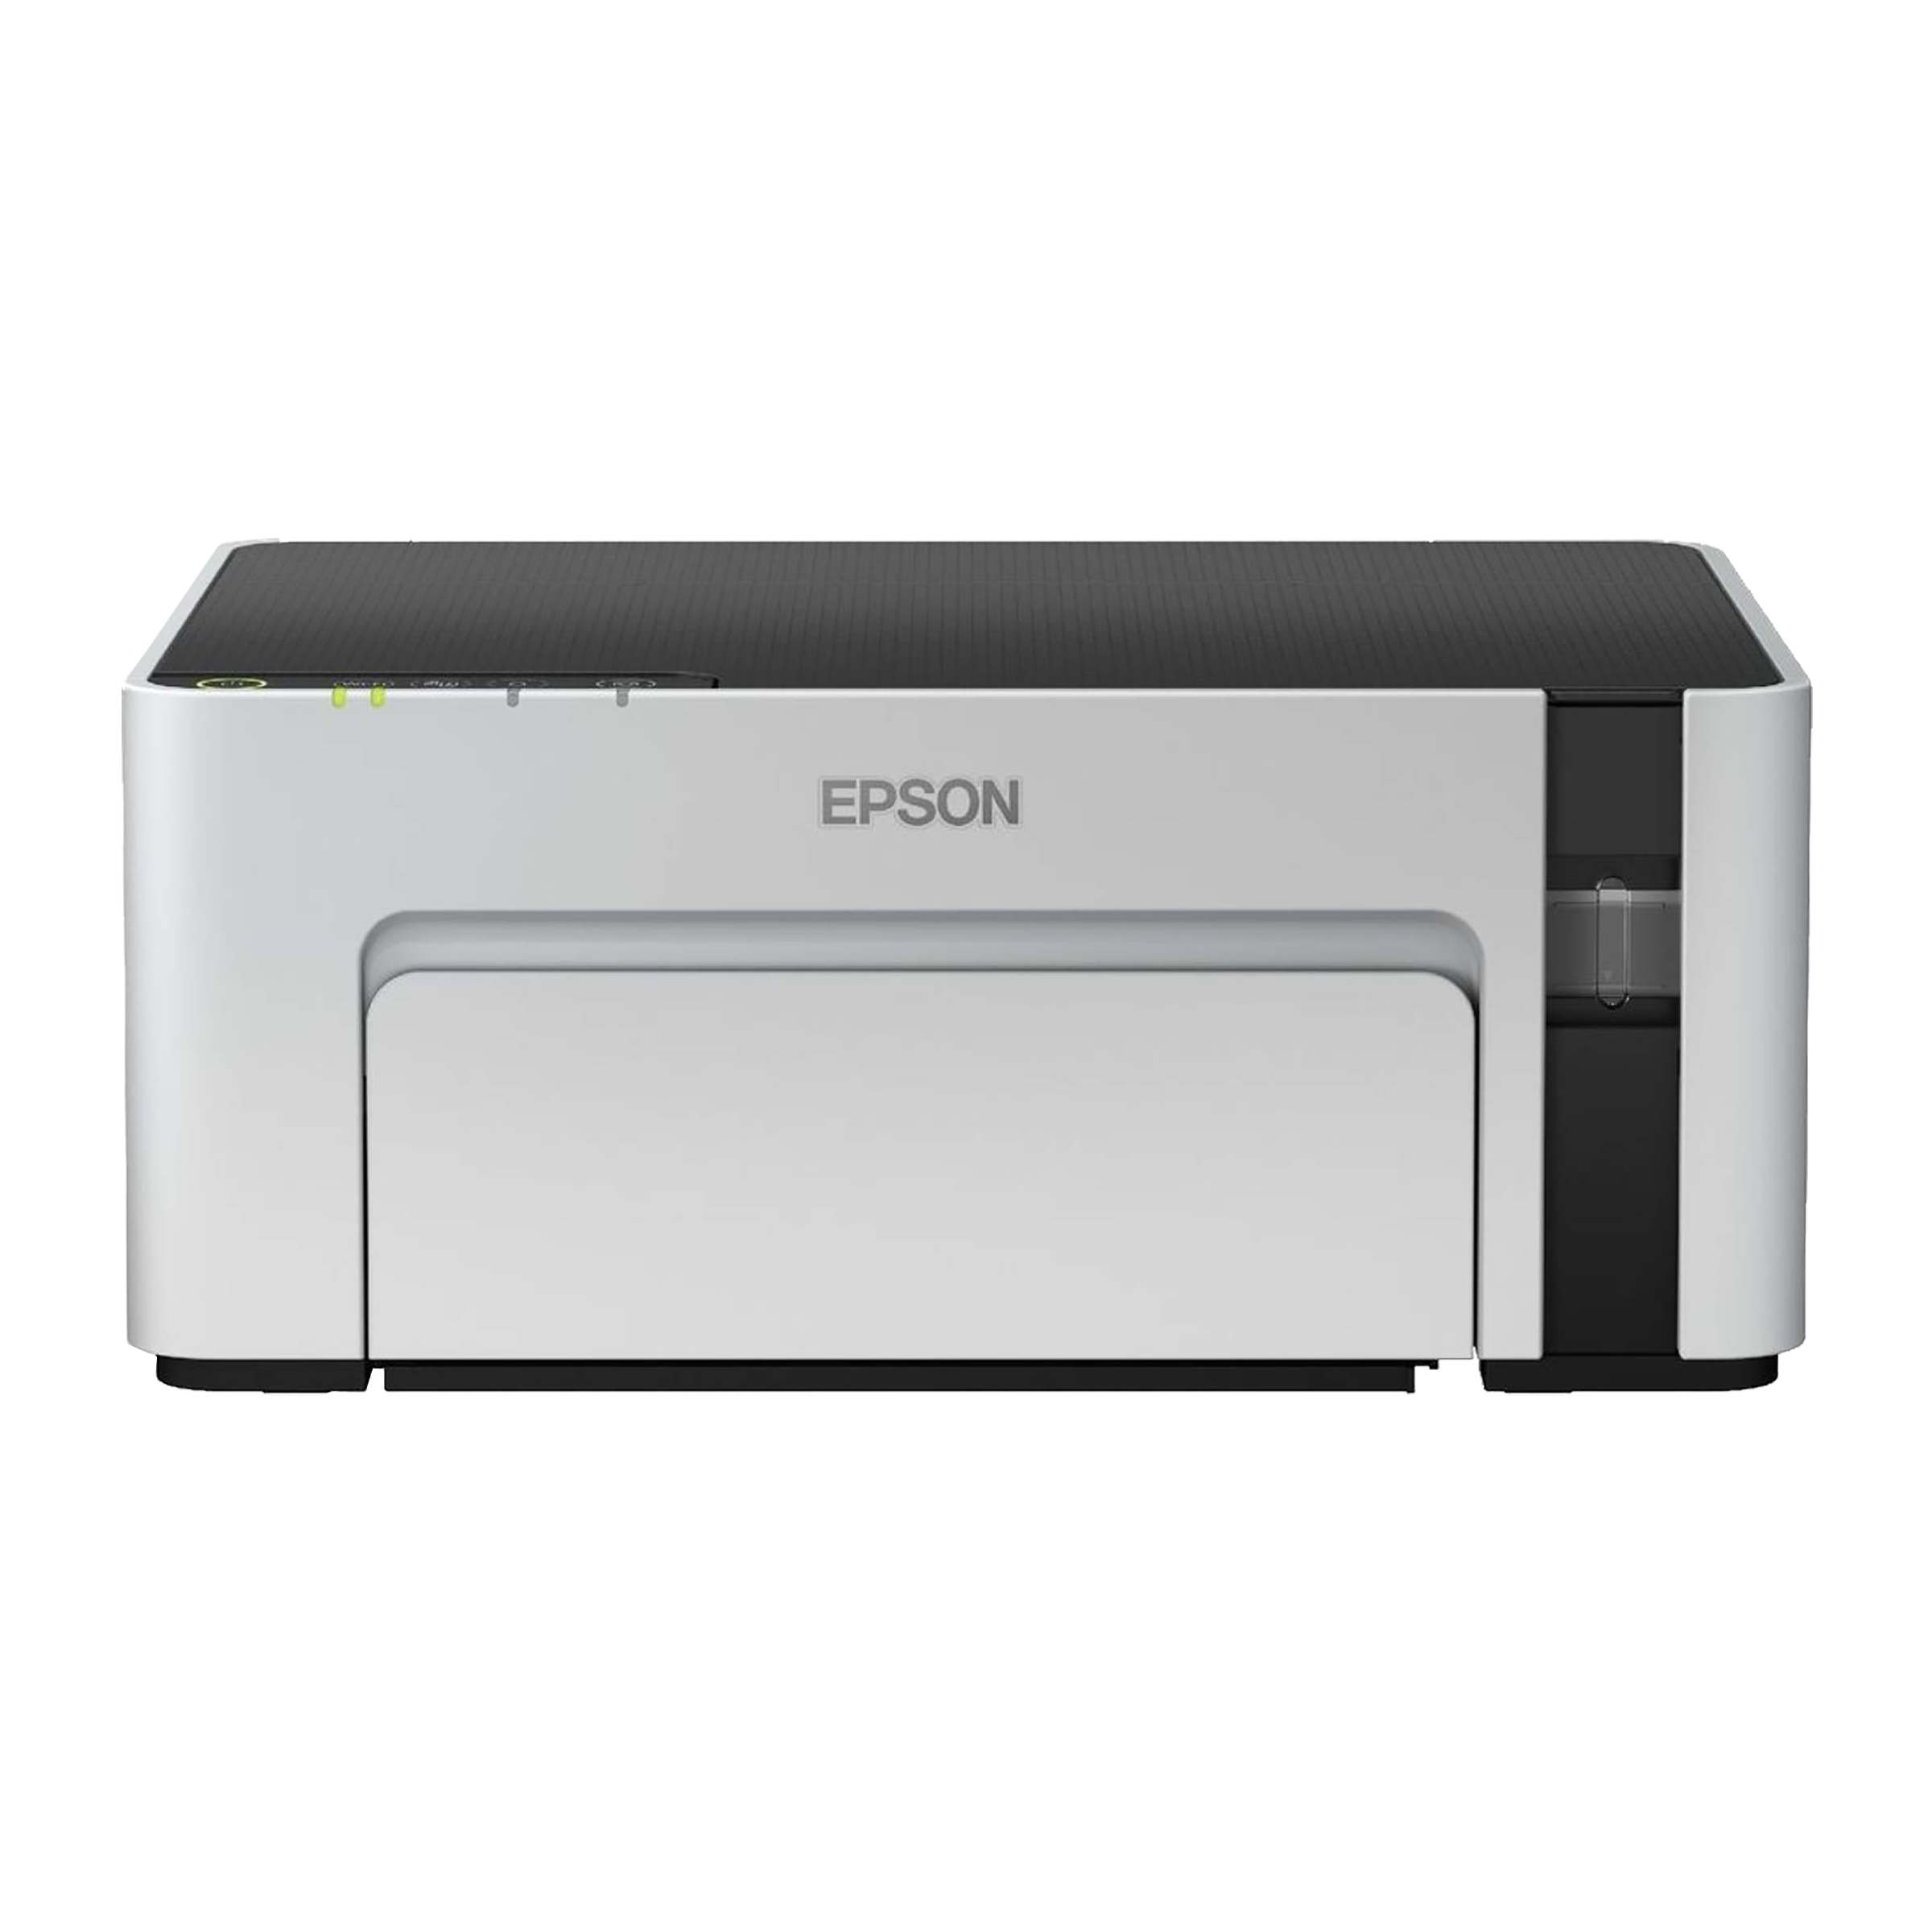 Epson EcoTank M1120 Wireless Black & White Printer Ink Tank (USB 2.0 Connectivity, C11CG96504, Black)_1